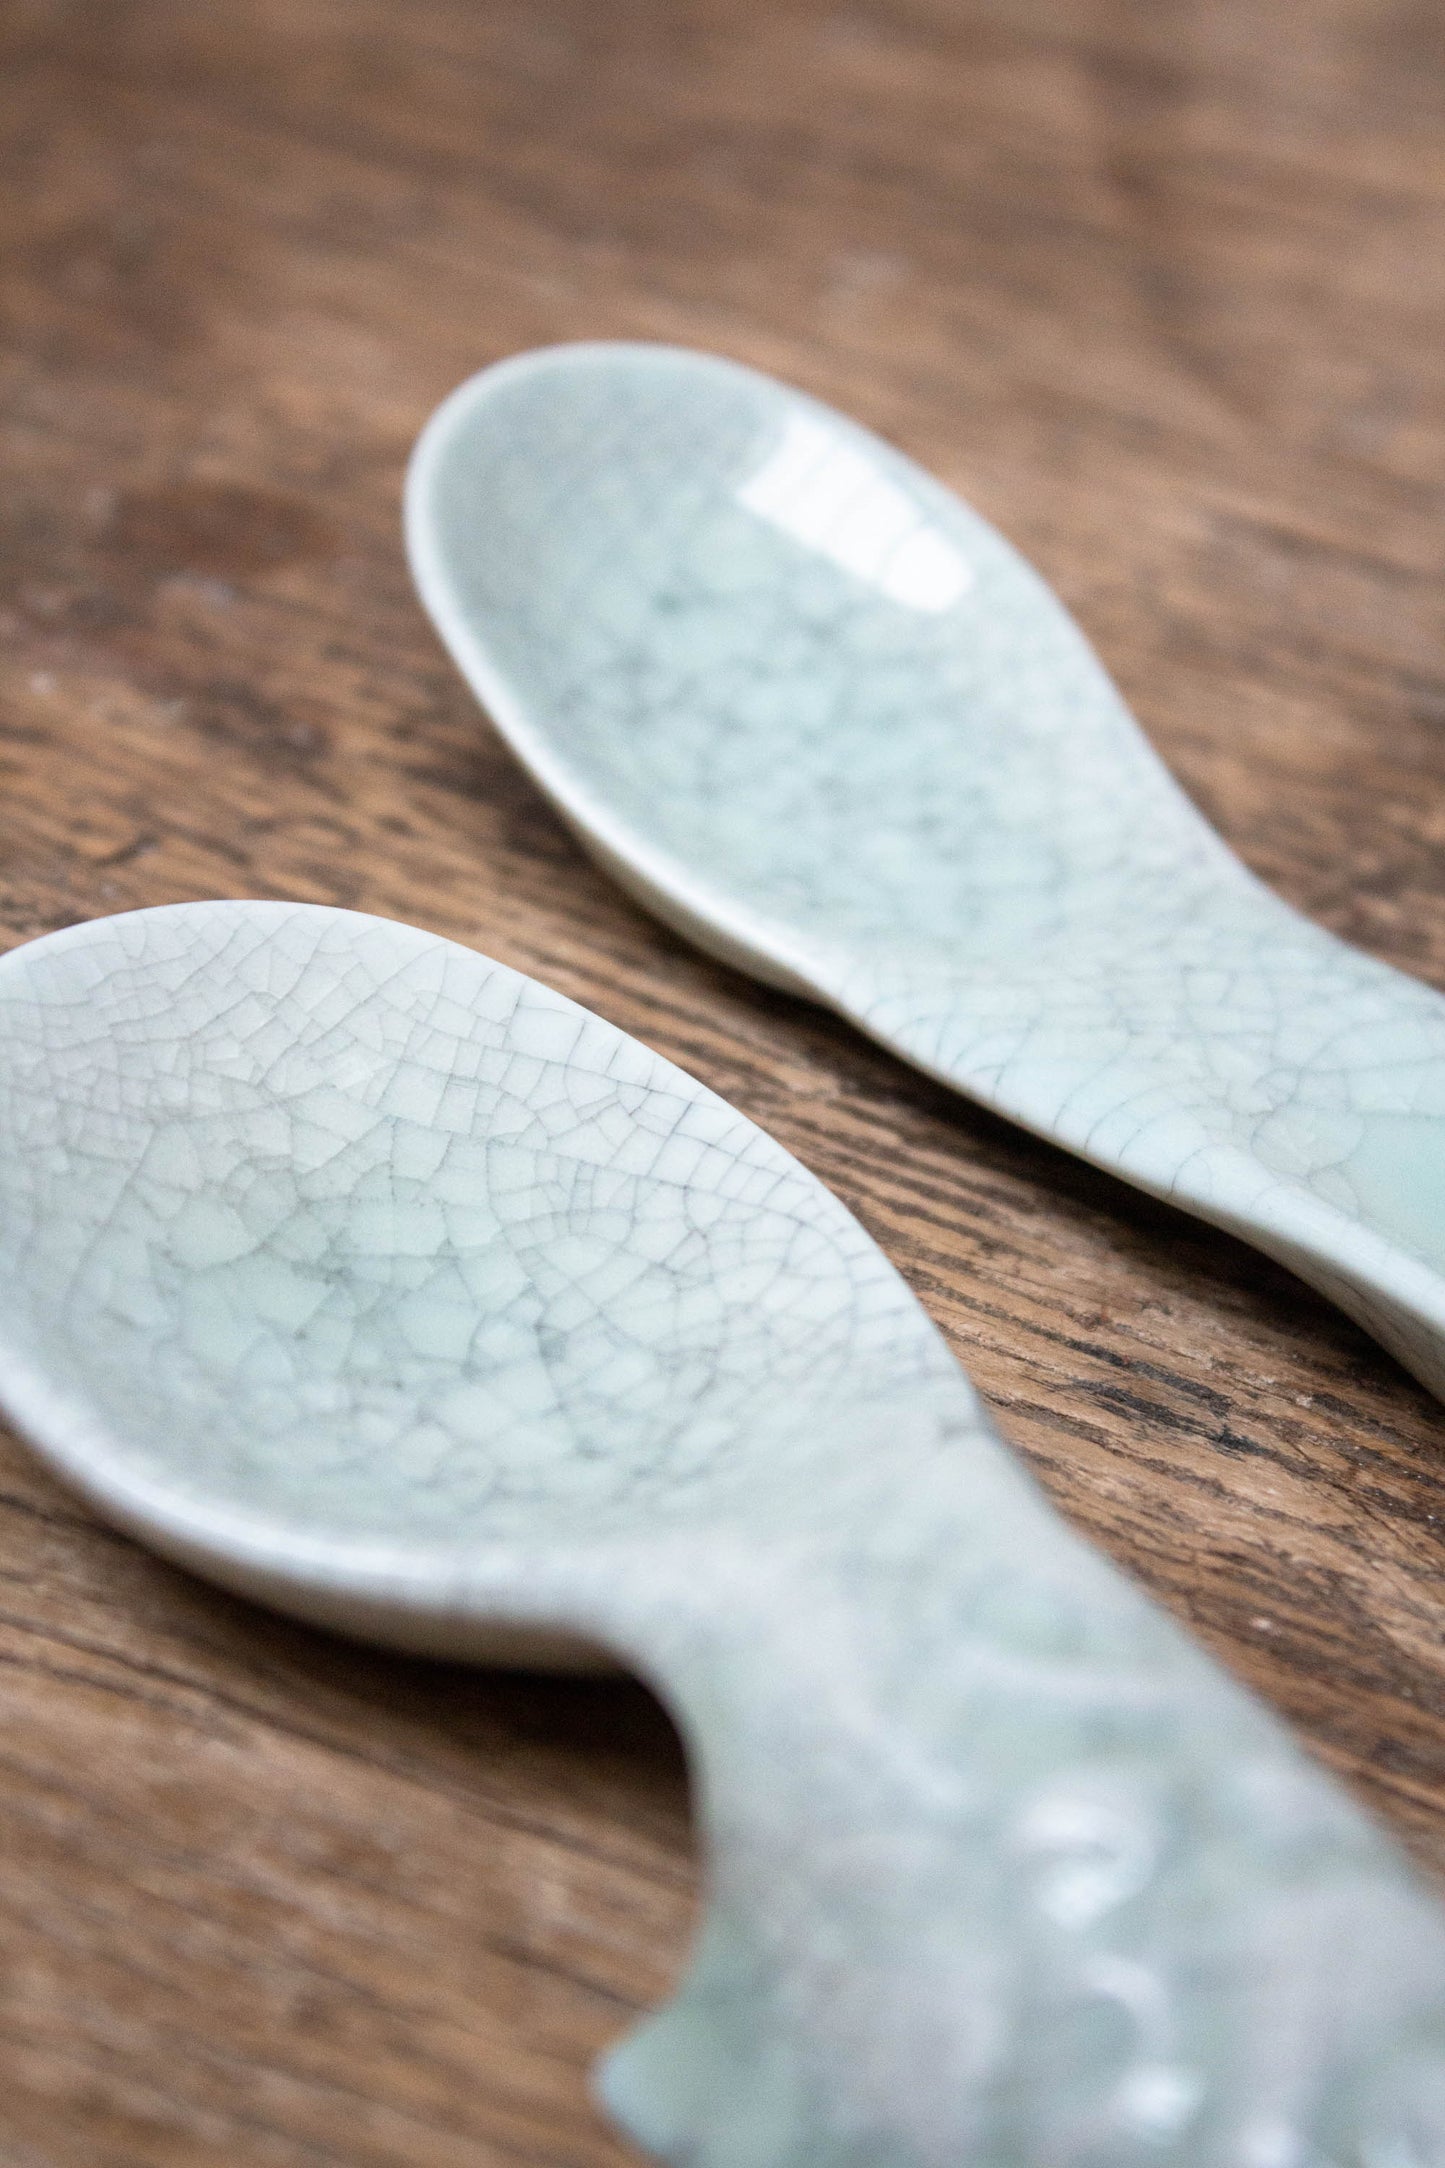 Details of the Nami Dashi Spoon Celadon by Jars Ceramistes.